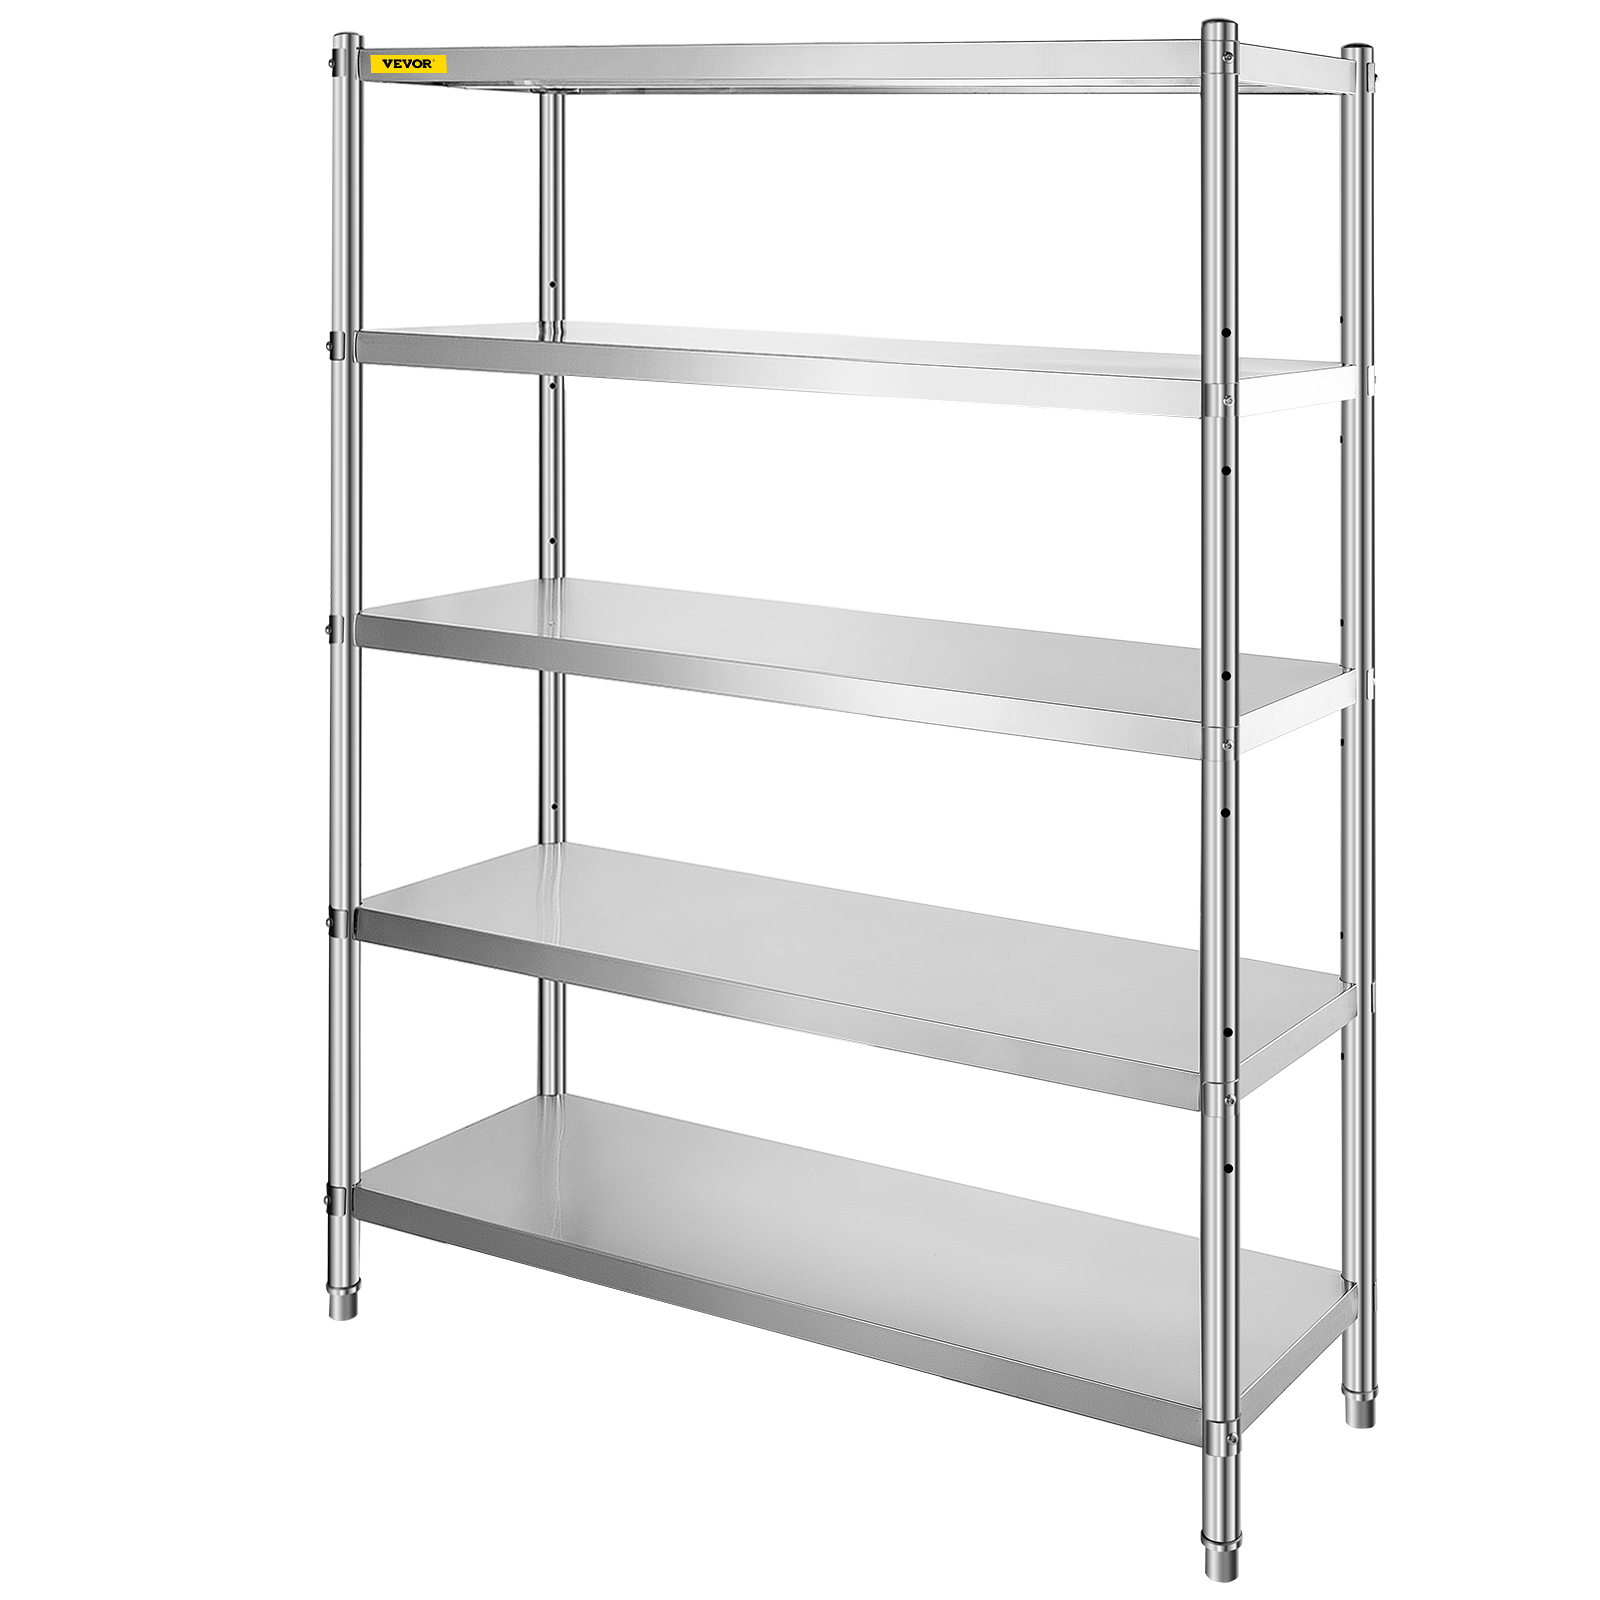 VEVOR Kitchen Shelves Shelf Rack Stainless Steel Shelving Organizer Units 48*72 inch